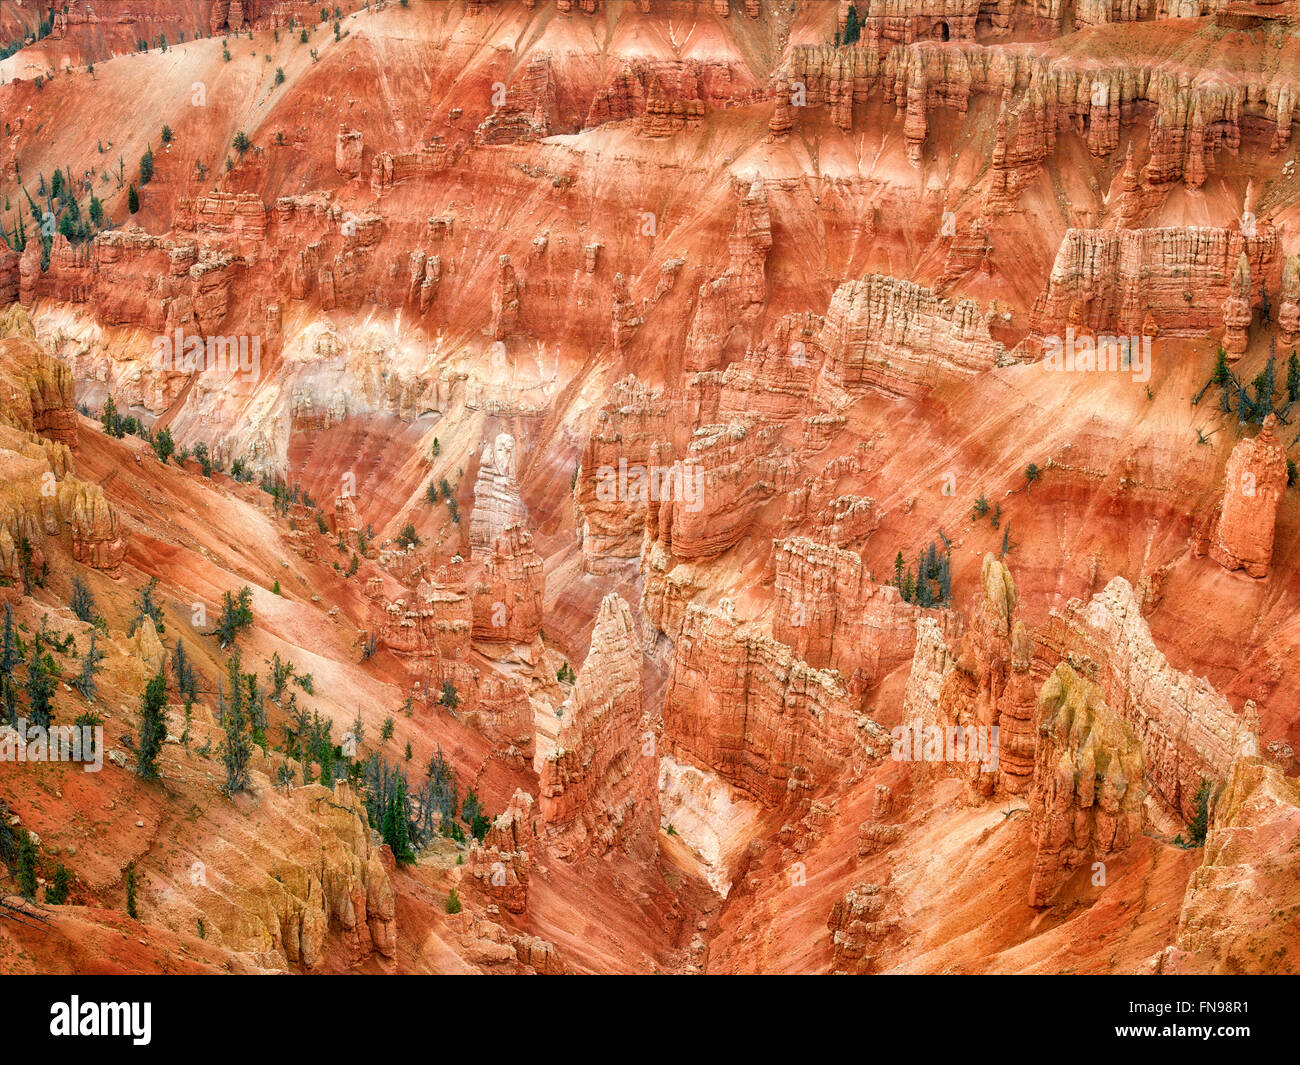 Canyon lands in Cedar Breaks National monument, Utah Stock Photo